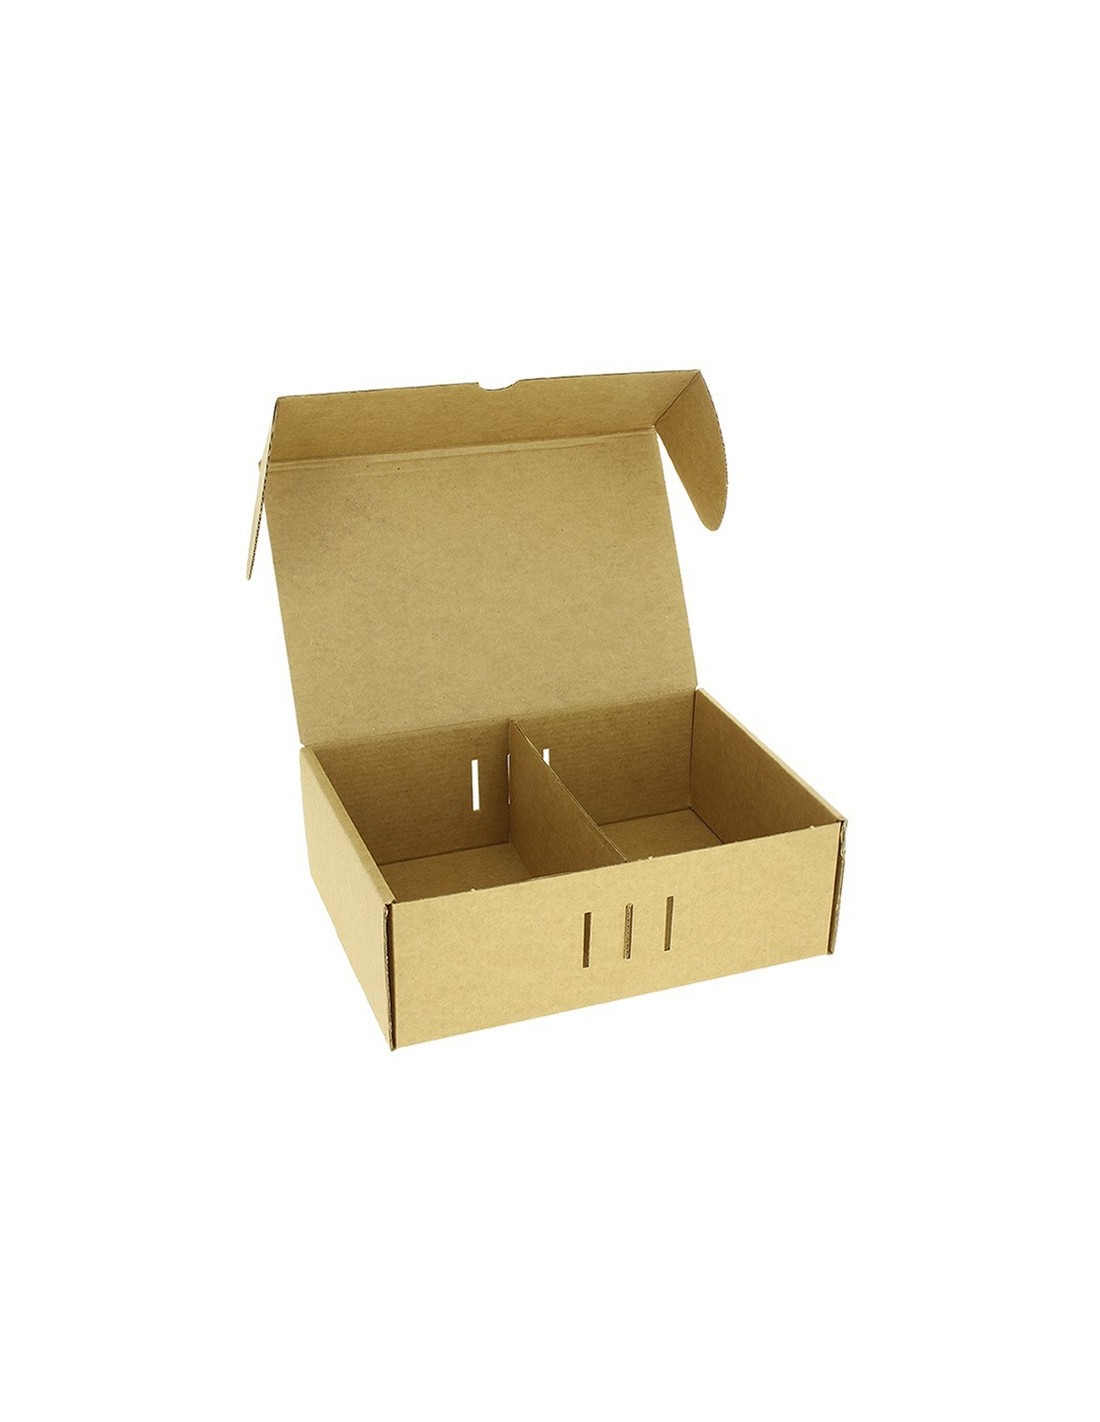 Cajas para envíos alargadas  Caja de cartón, Cajas, Cartón